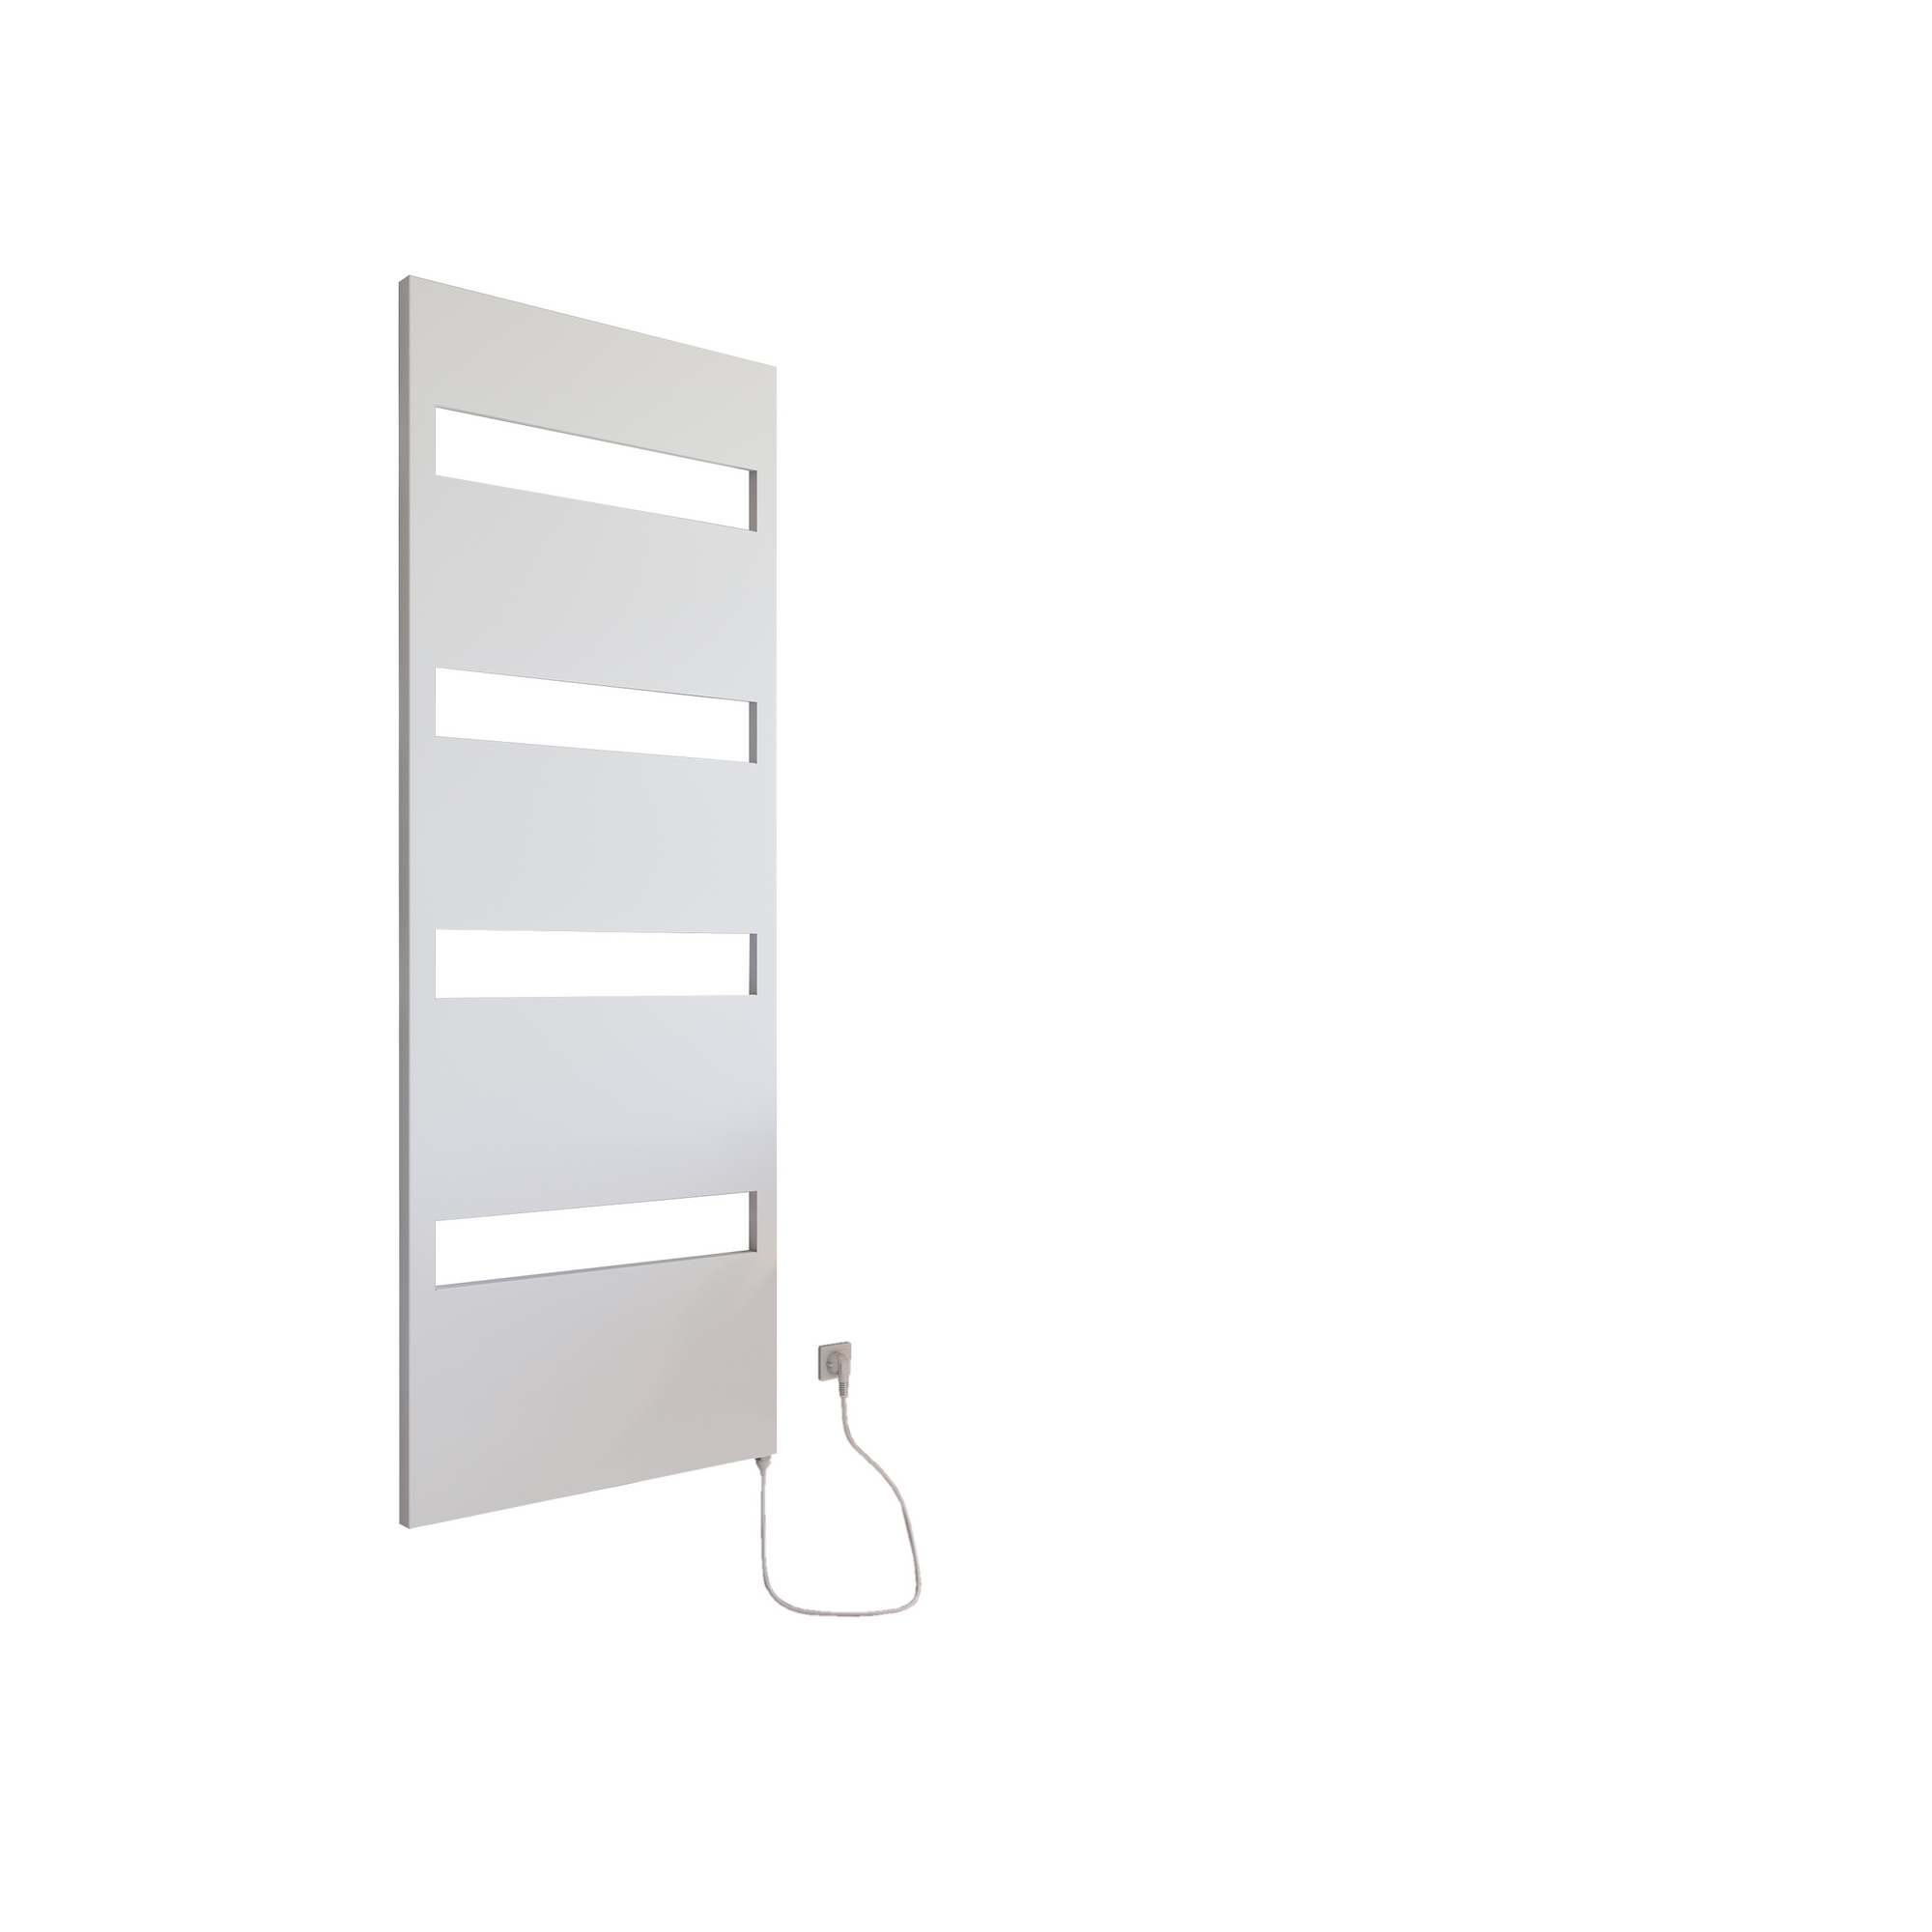 Badheizkörper 'Turin' weiß 170,3 x 60,5 cm, Anschluss rechts + product picture